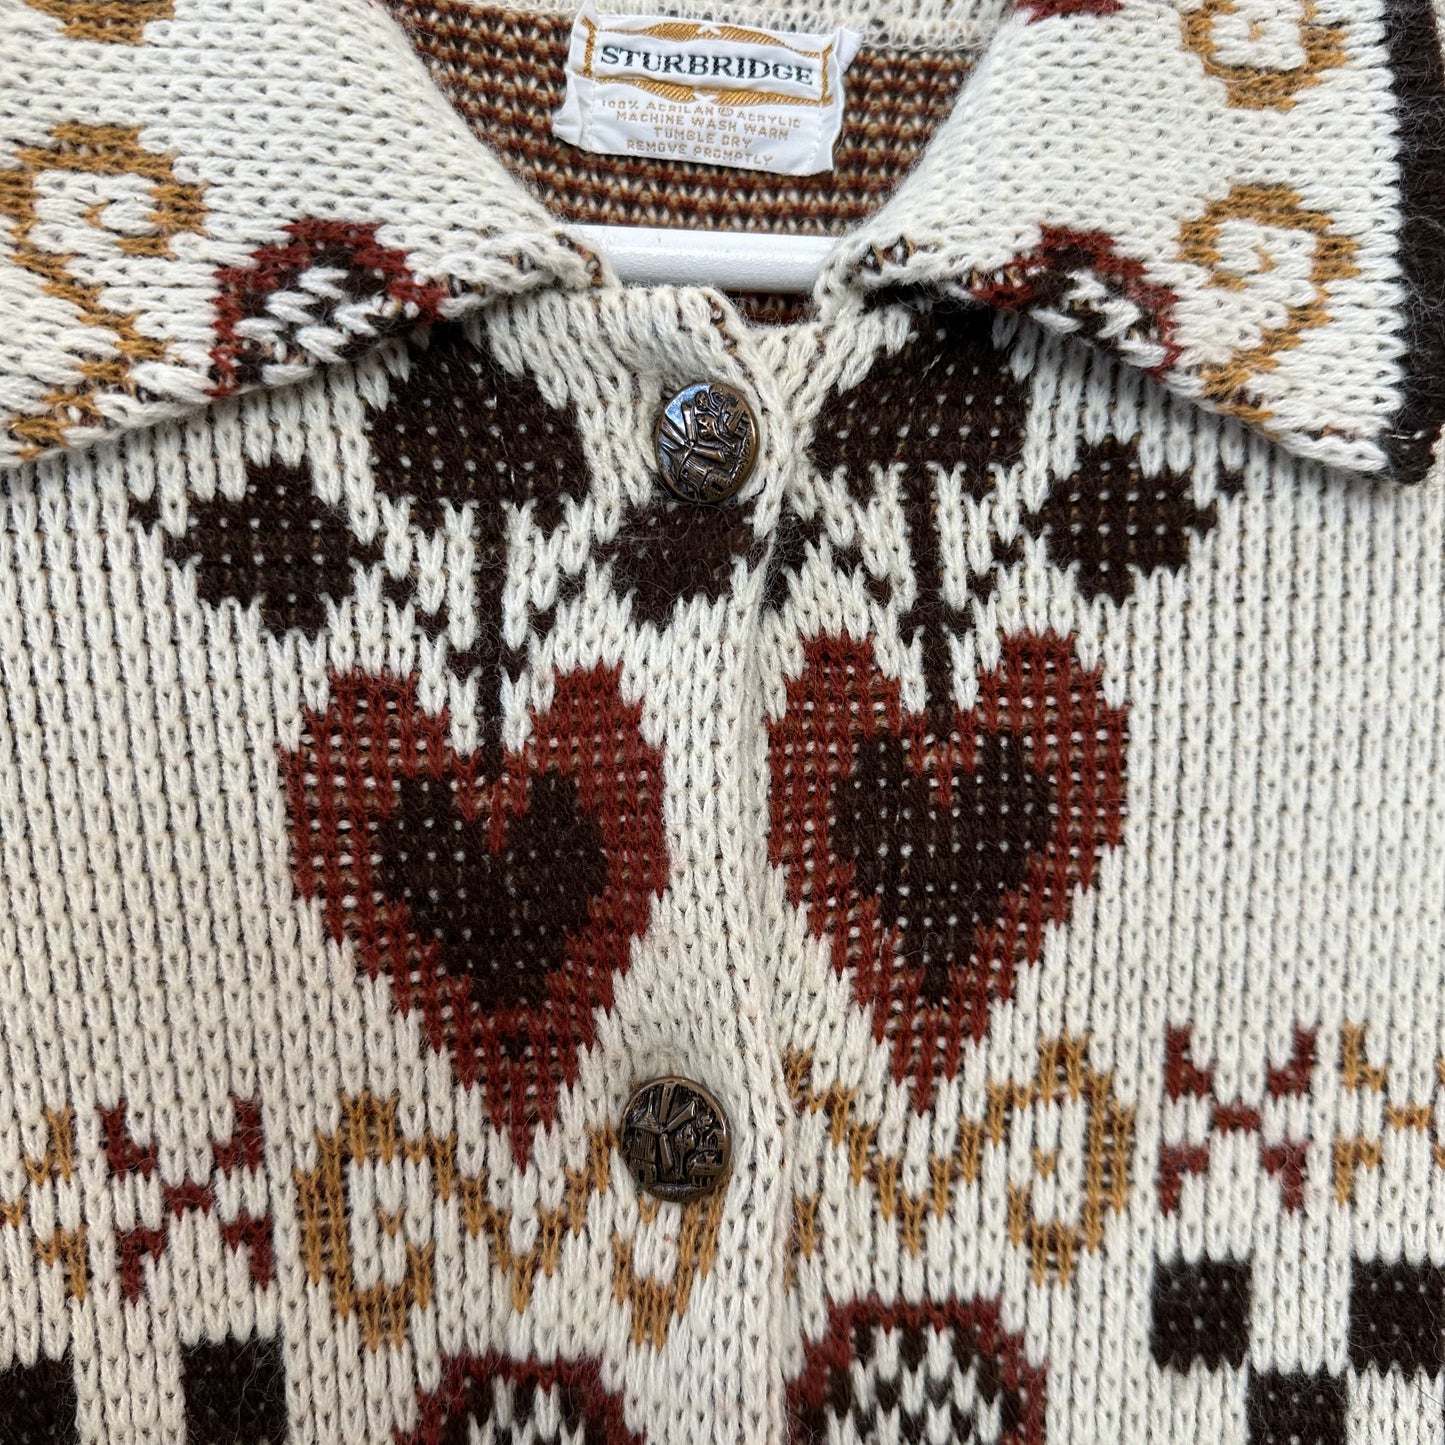 Vintage 70s Sturbridge Knit Poncho Cape Button Down Collared Coatigan Cardigan